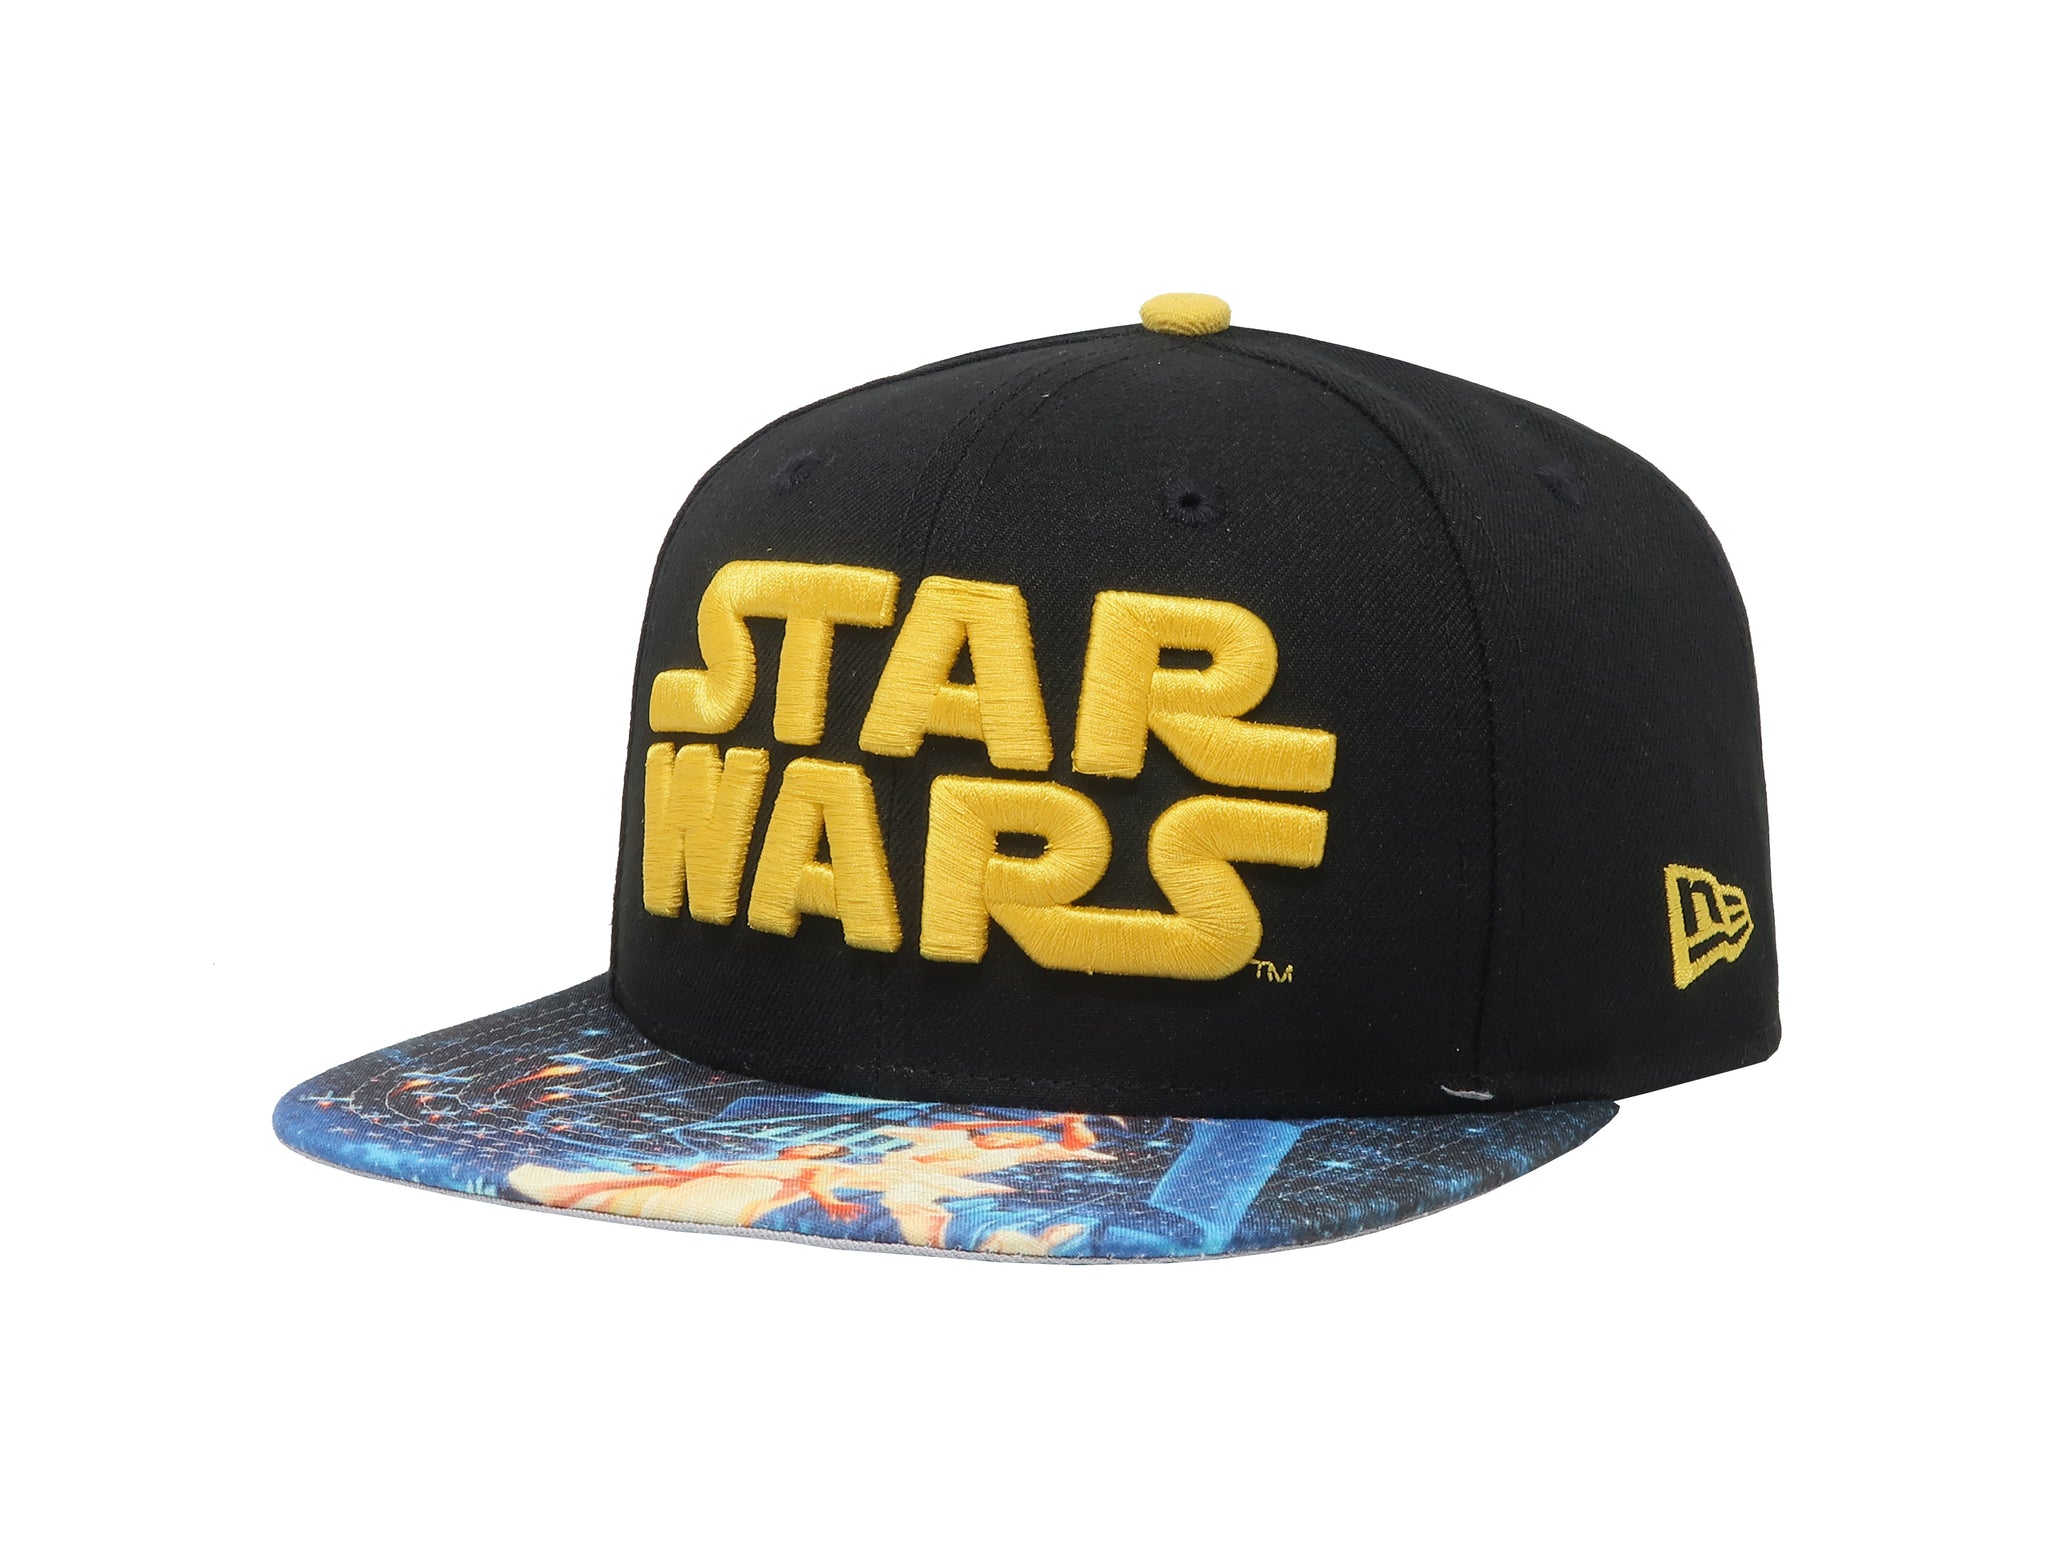 New Era 9Fifty Men's Star Wars Black/Blue Adjustable SnapBack Cap